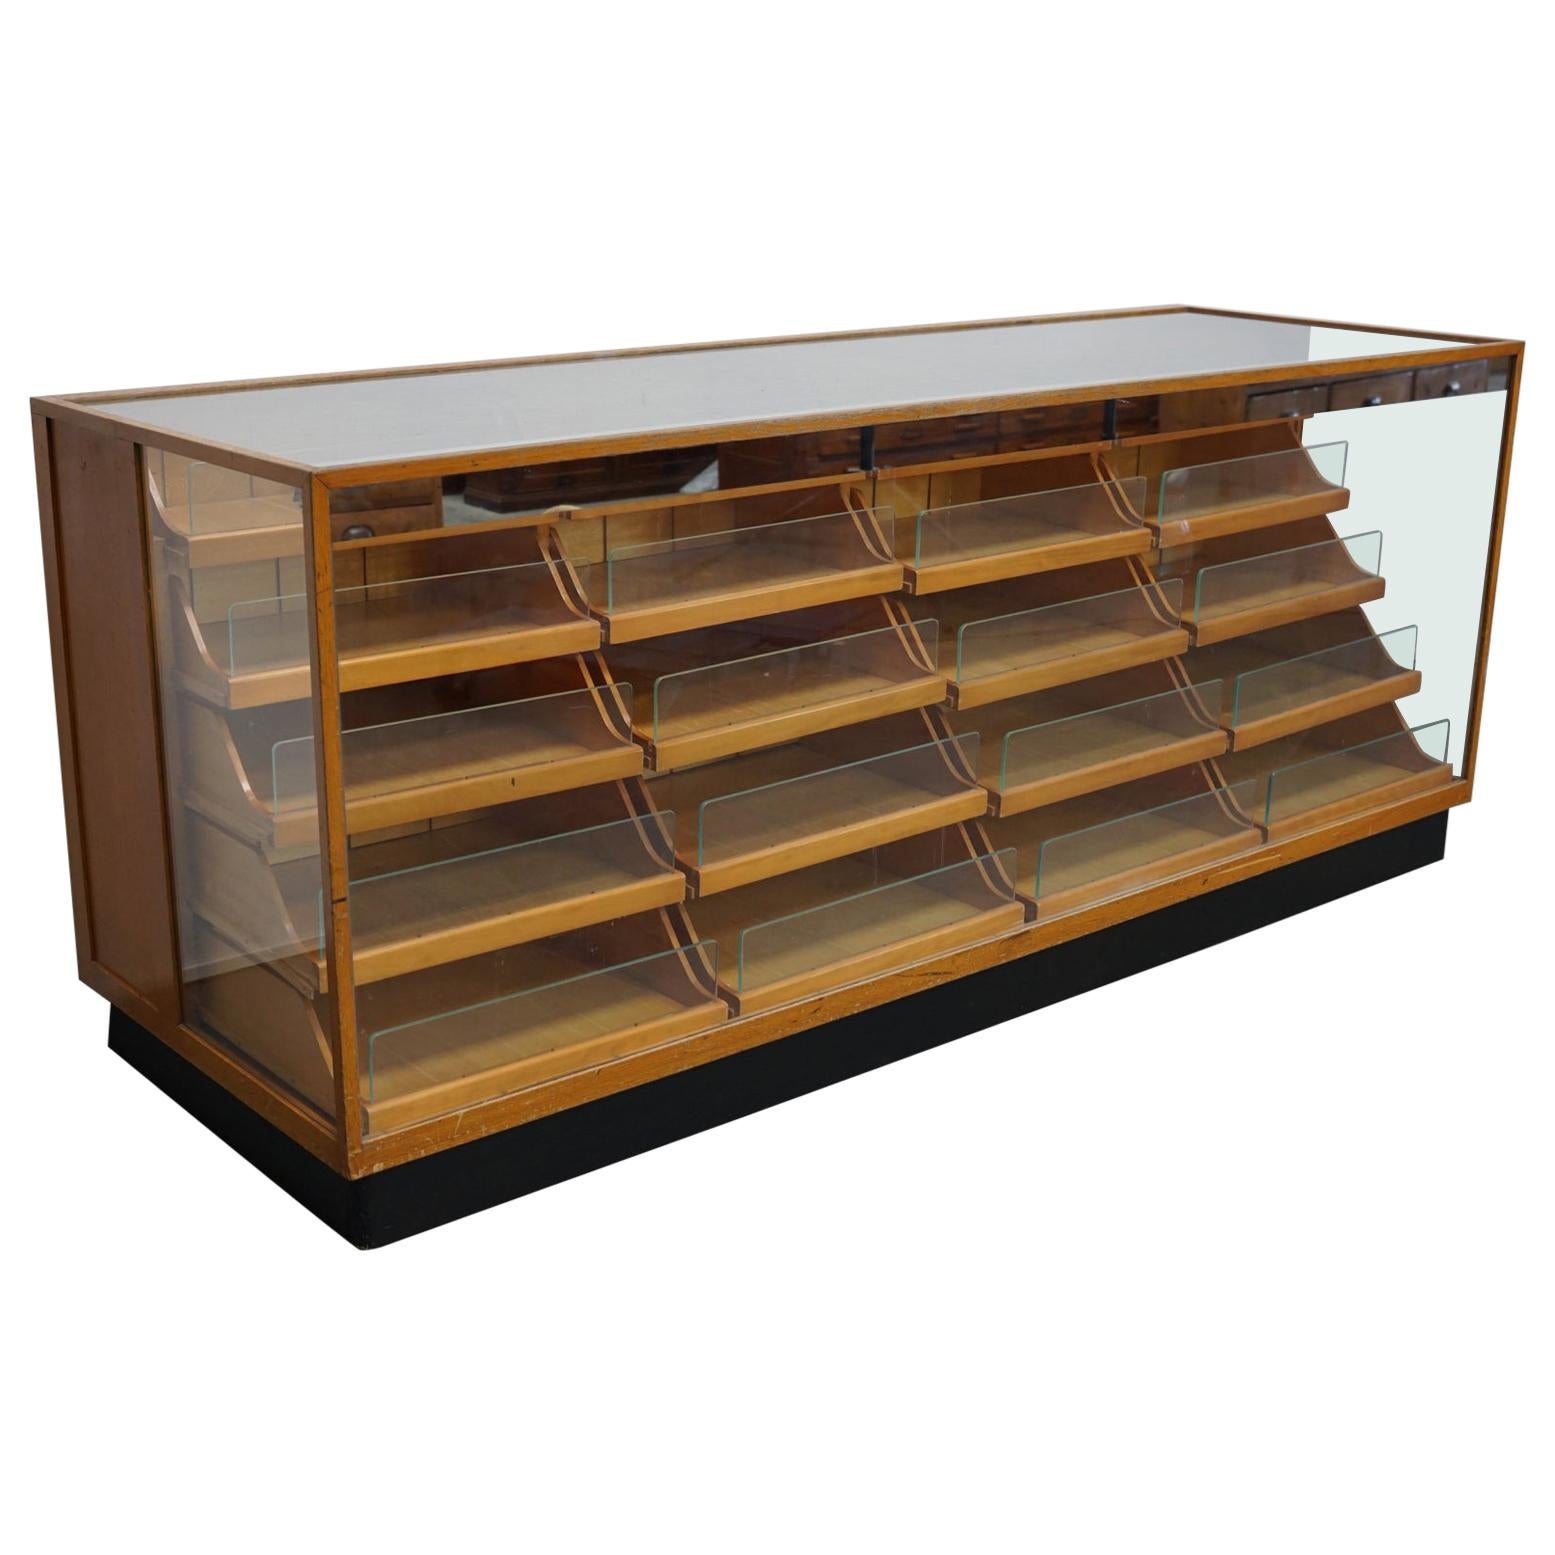 Oak Haberdashery Shop Cabinet/Retail Unit, 1950s